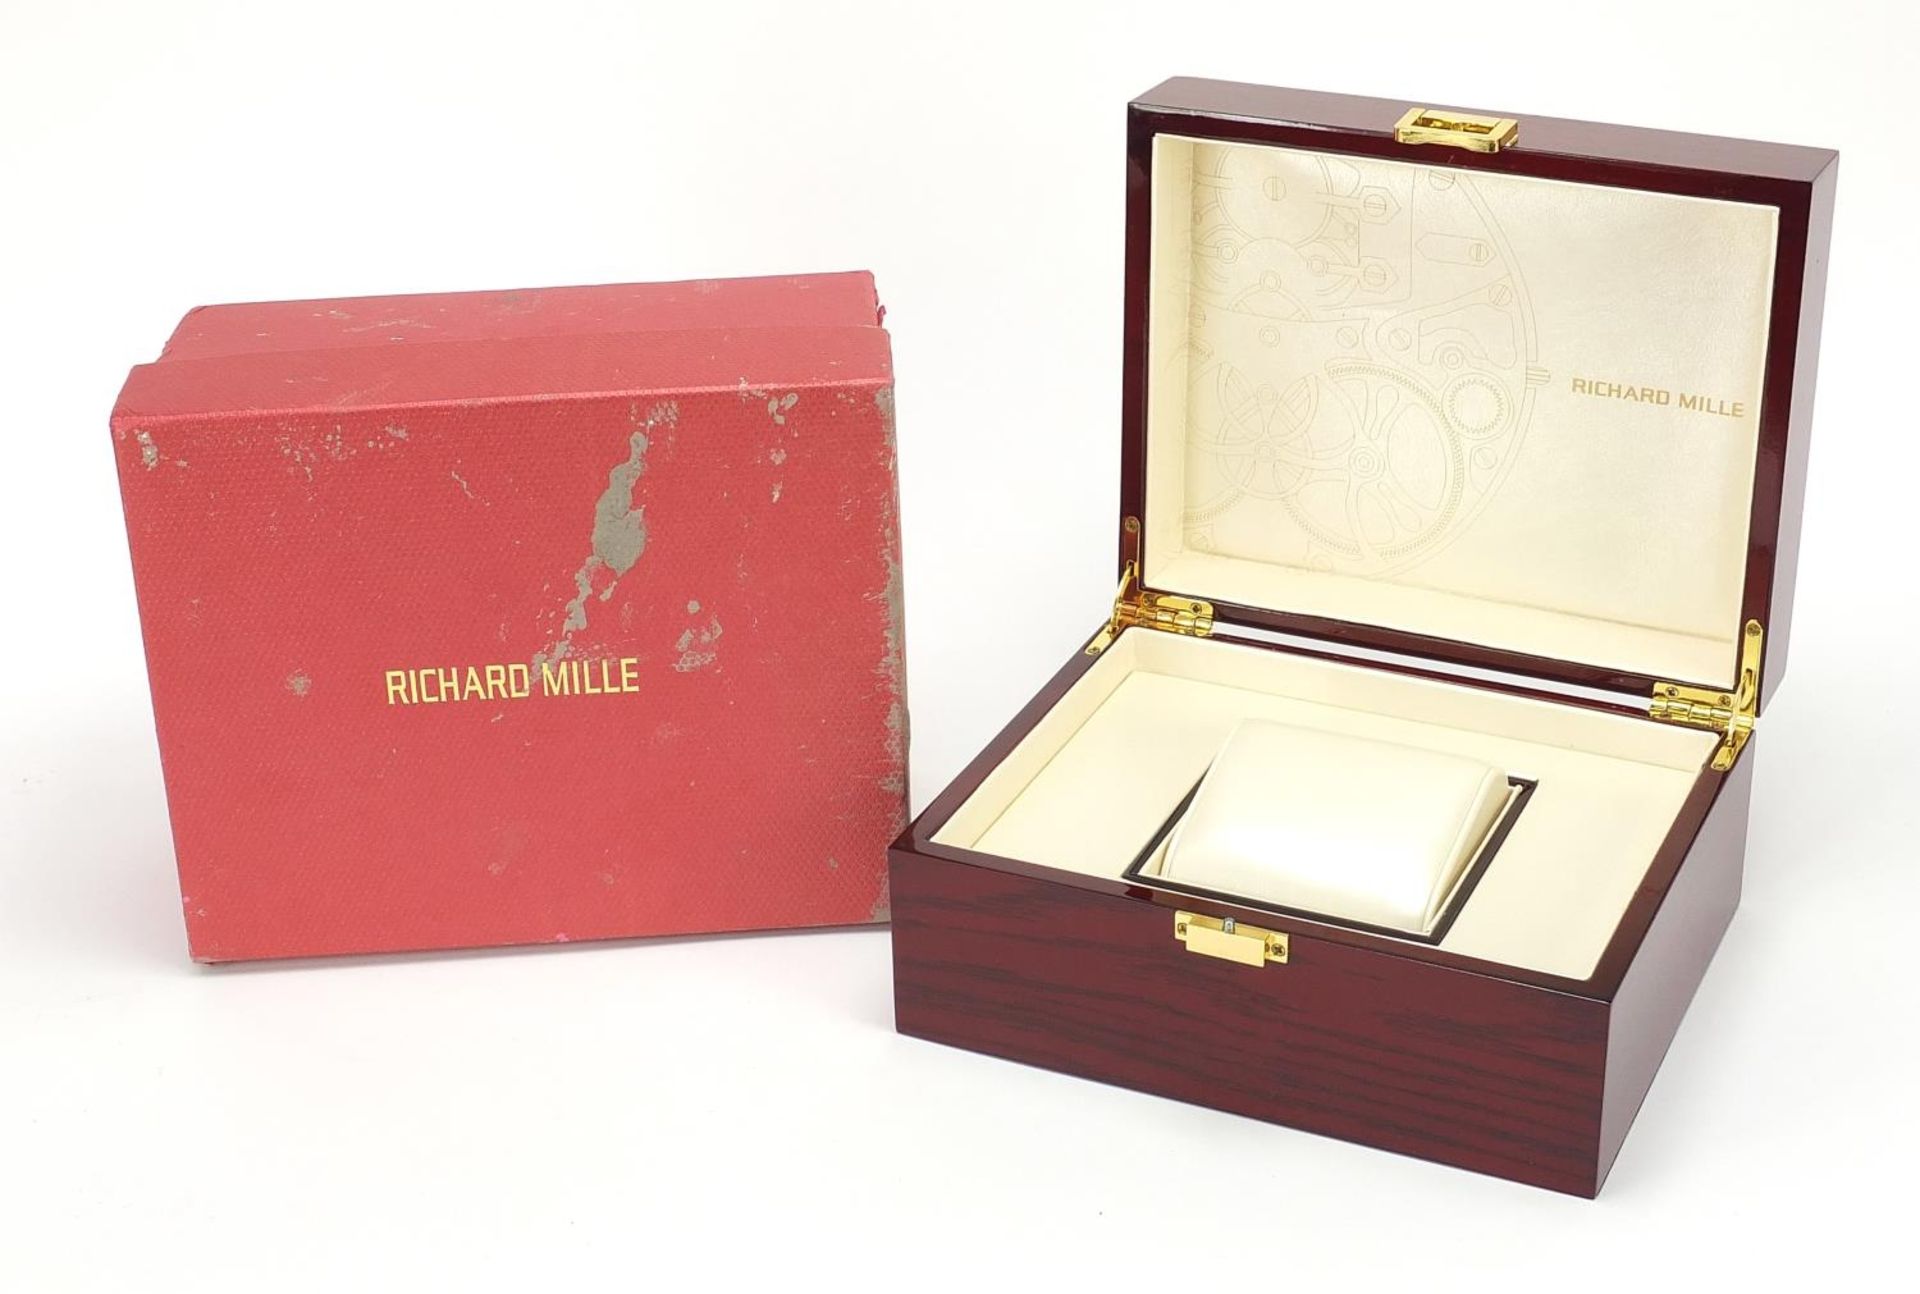 Richard Mille fitted watch box, 10cm H x 21cm W x 17cm D